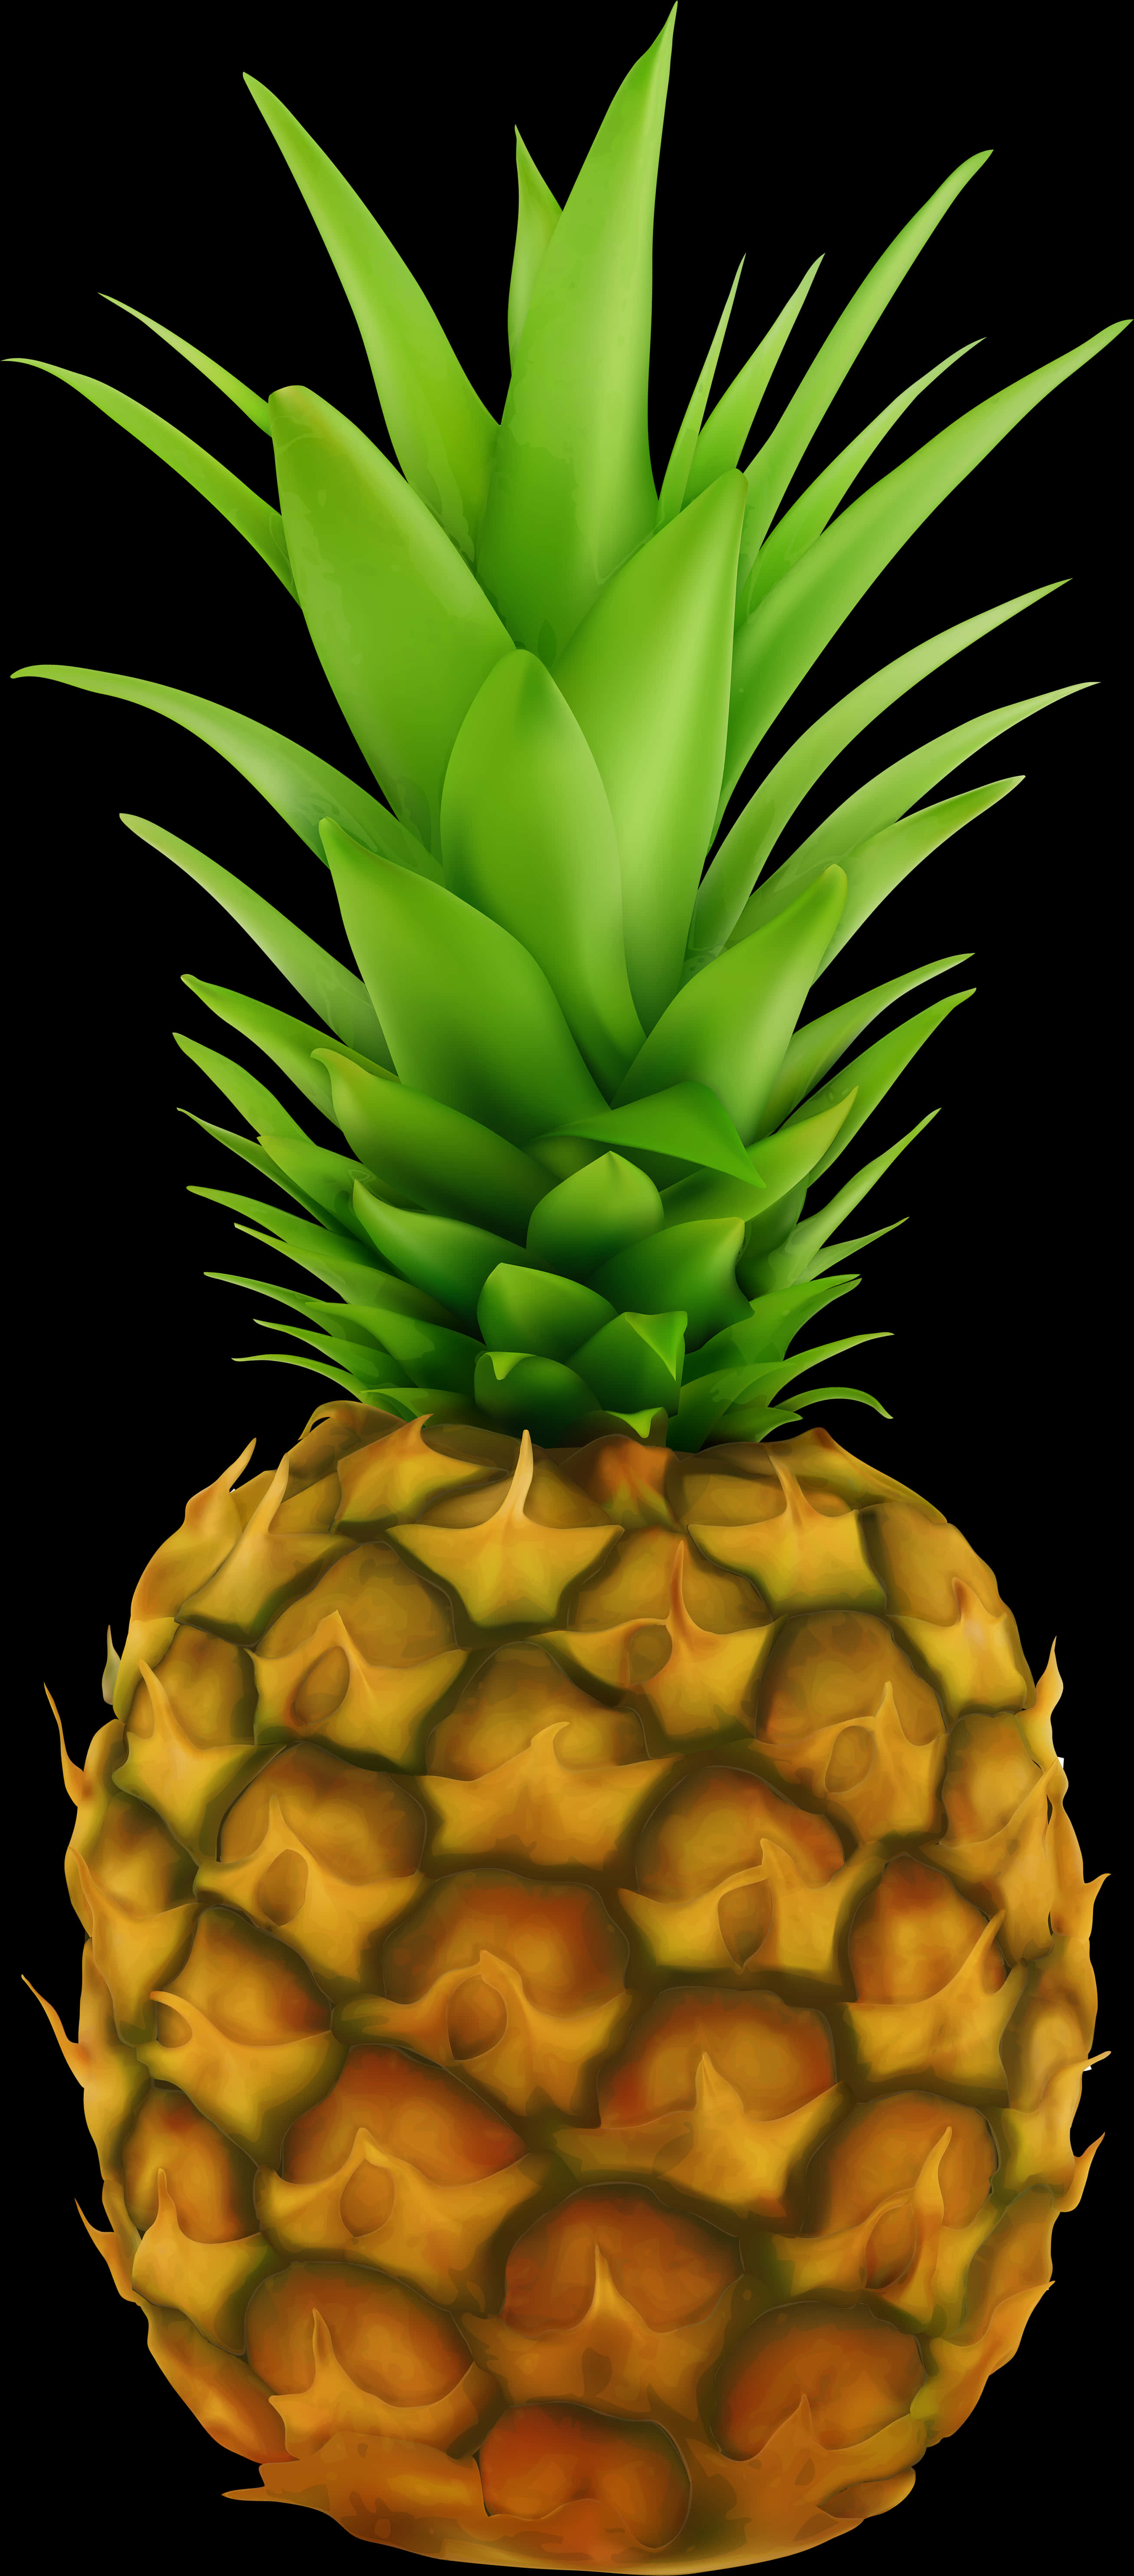 Vibrant Pineapple Artwork PNG